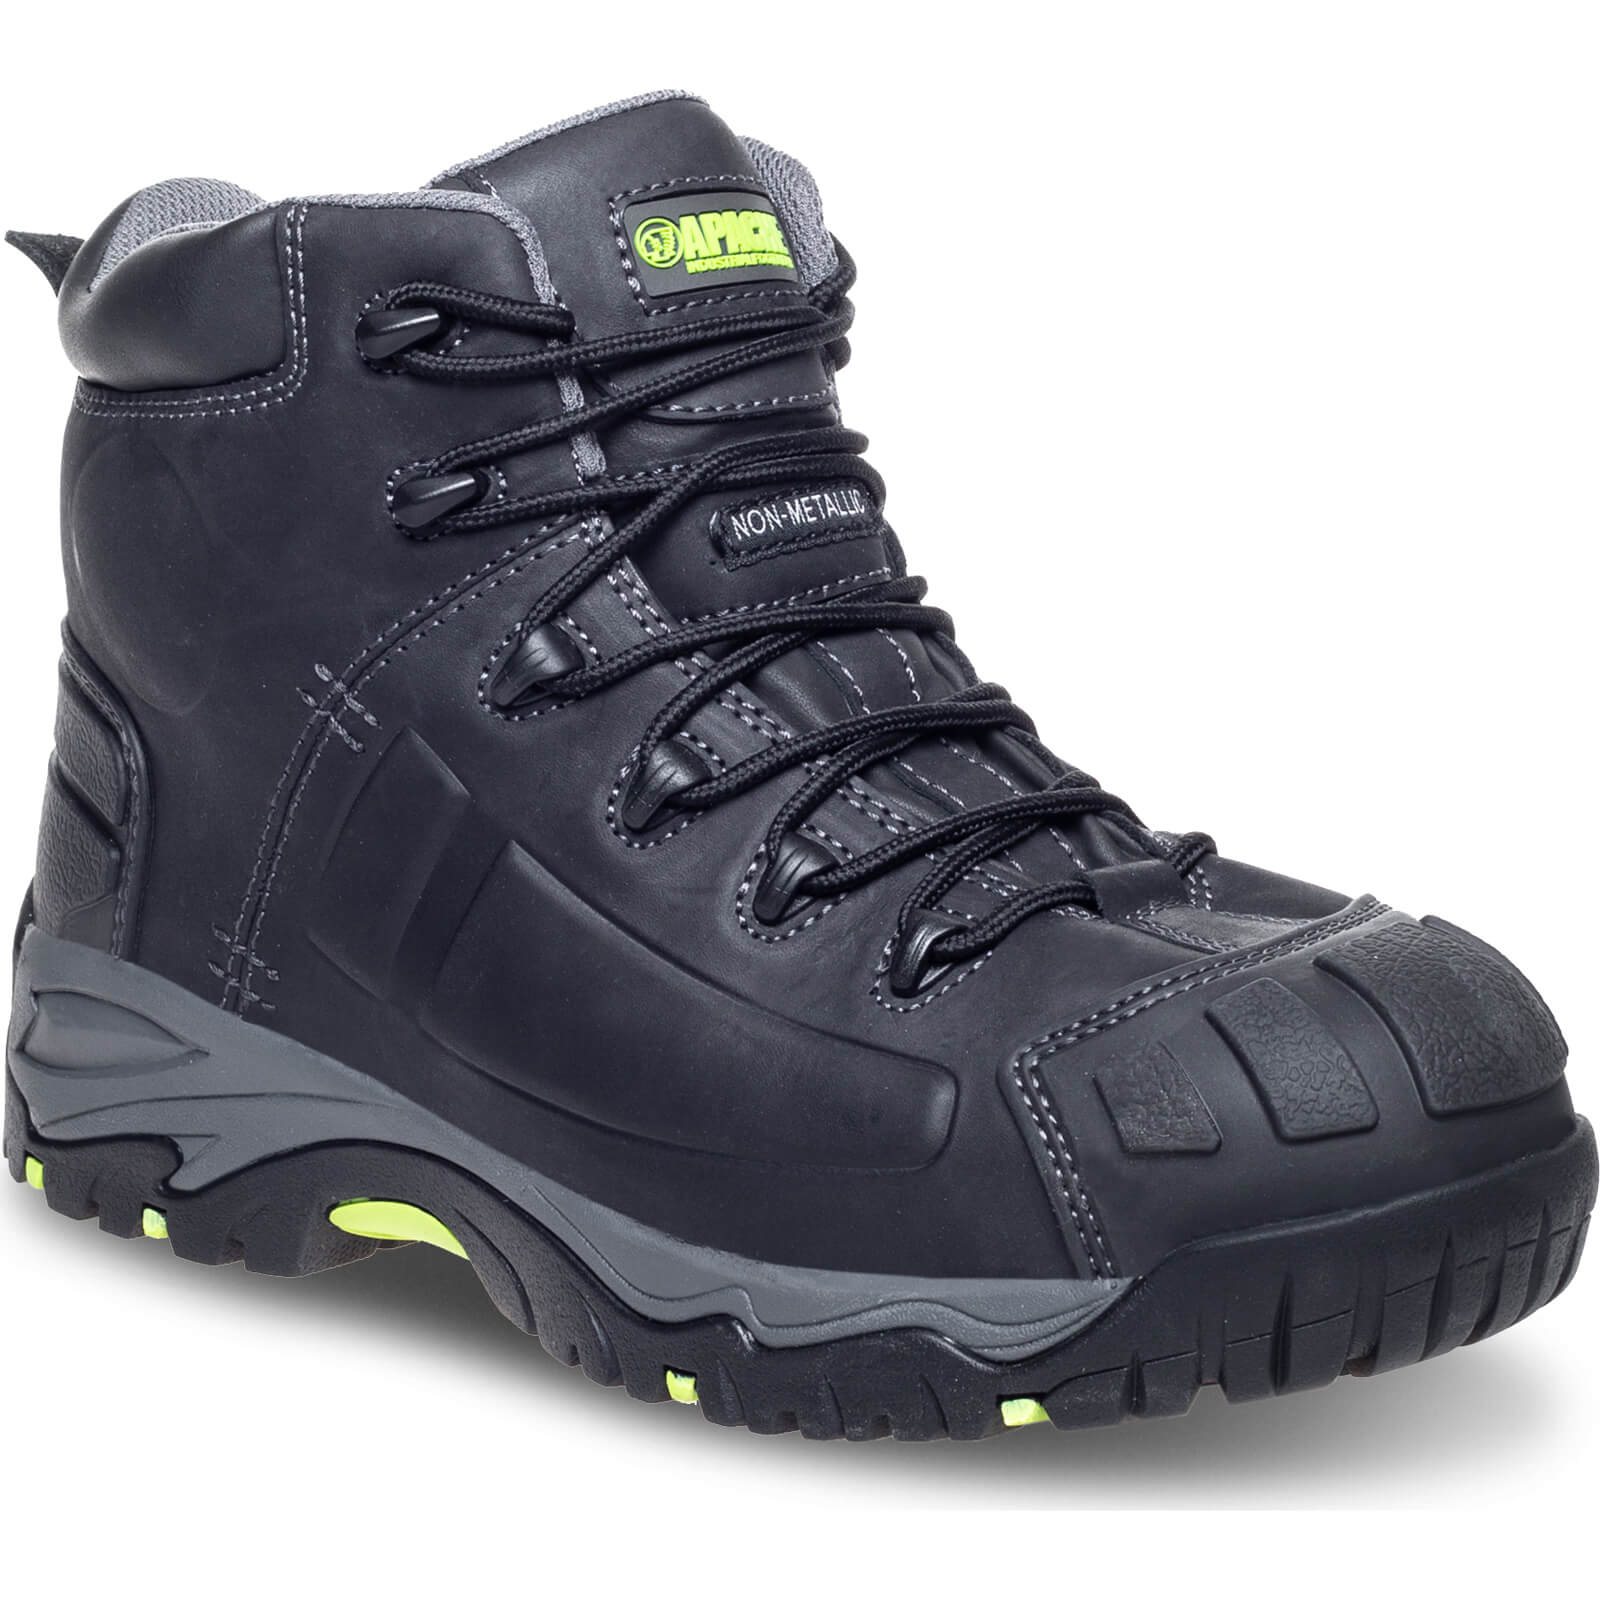 Apache Mercury Non Metallic Waterproof Safety Boots Black Size 12